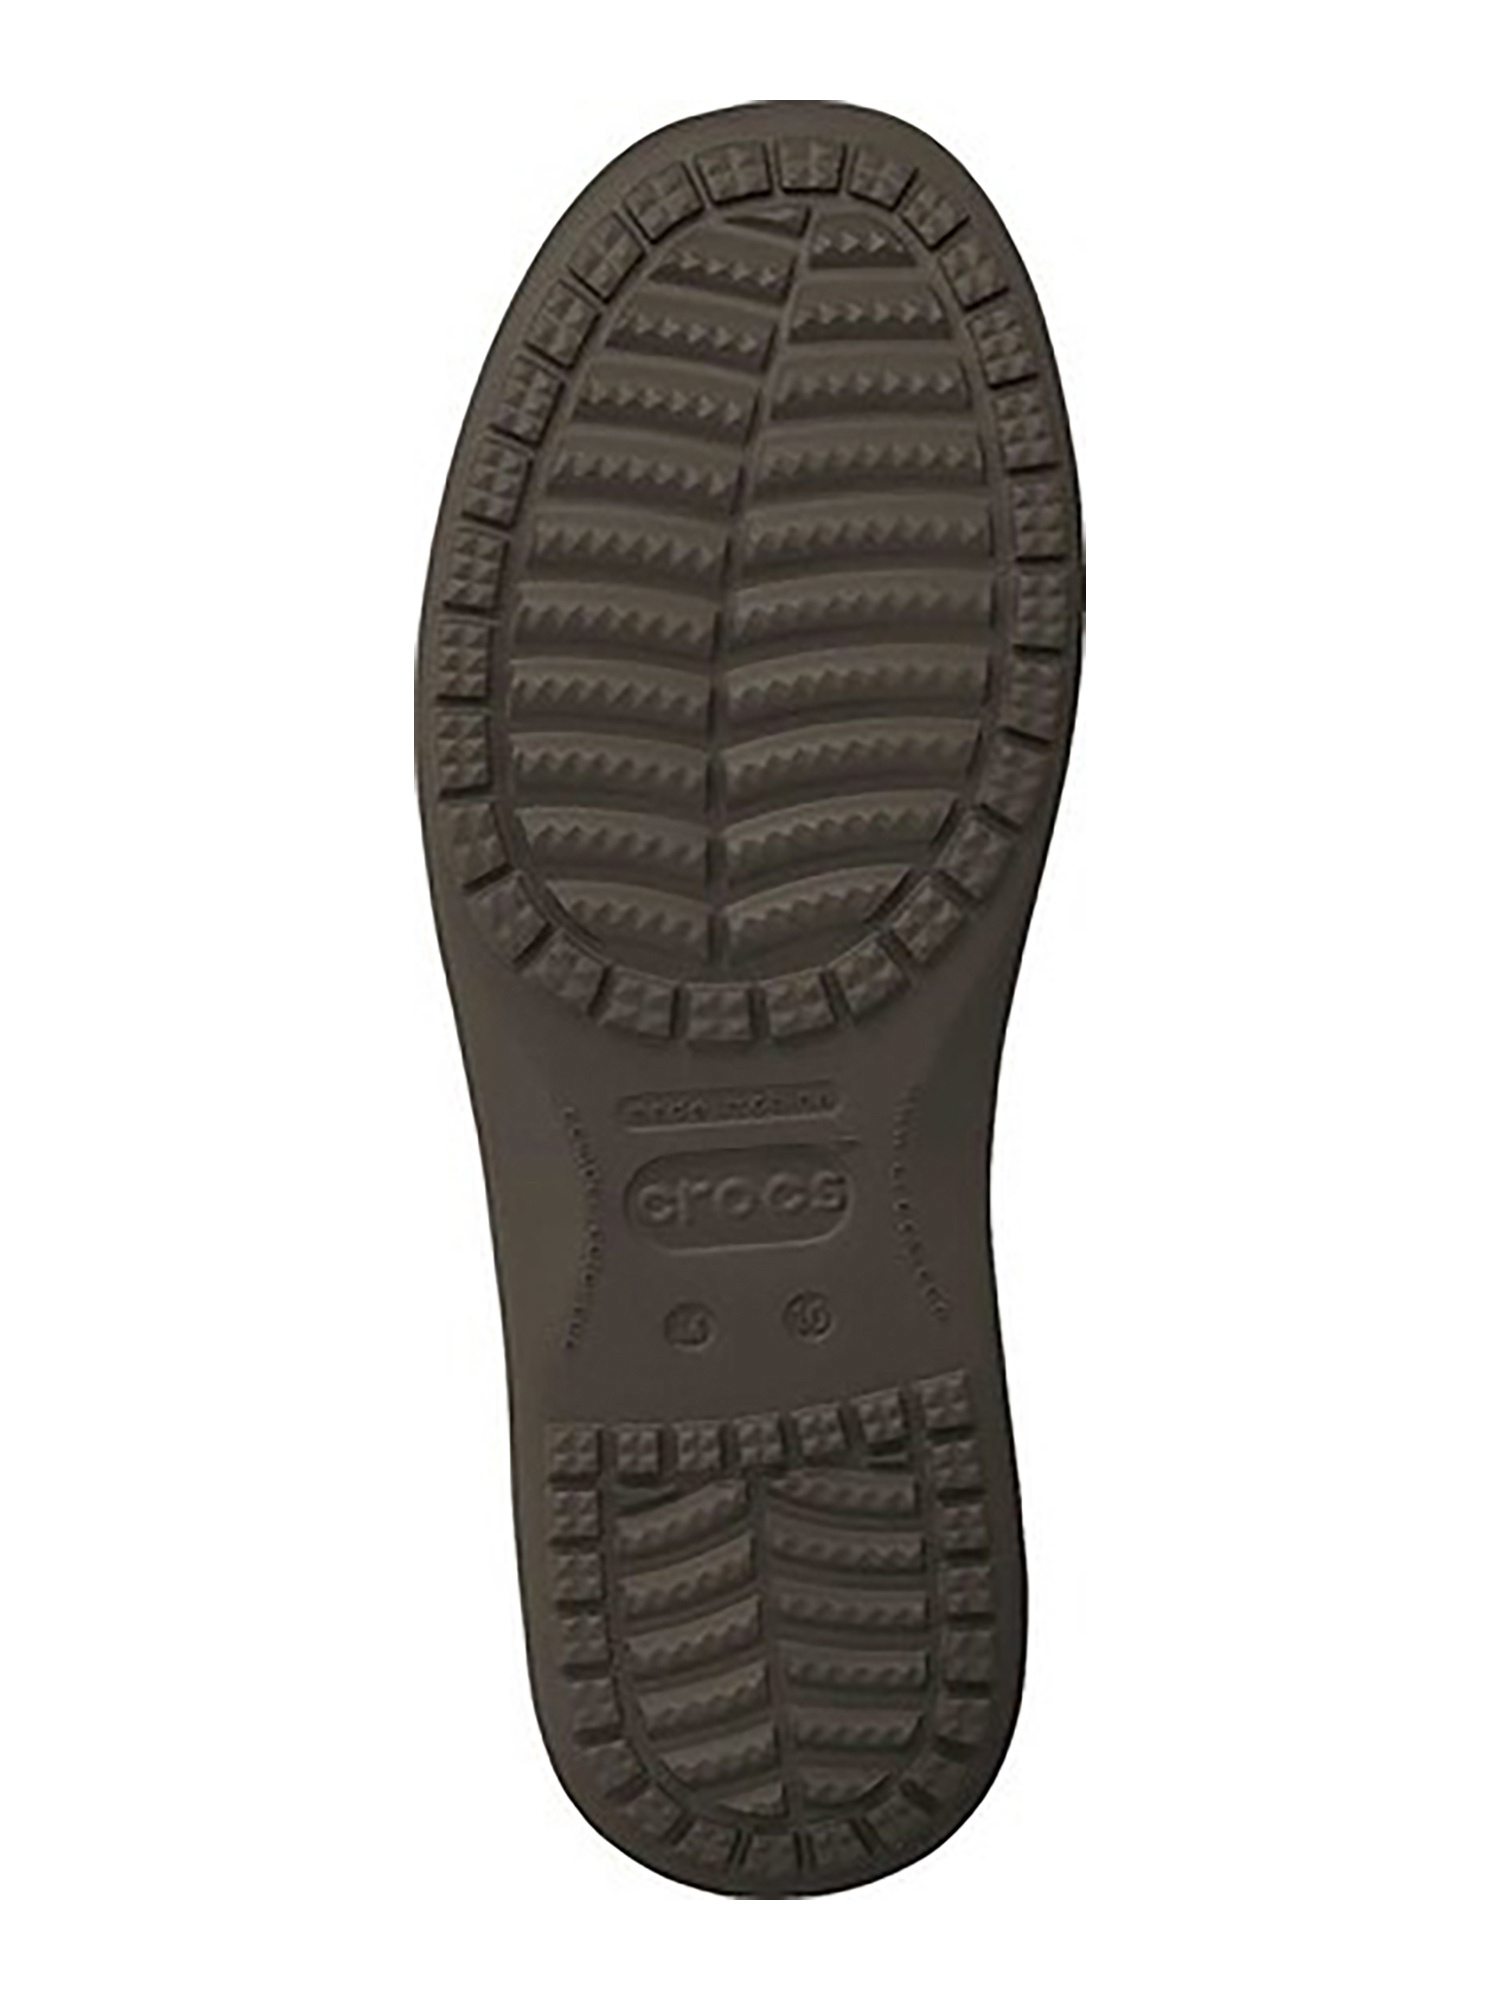 Crocs Men's Santa Cruz Slip on Loafers - image 3 of 7